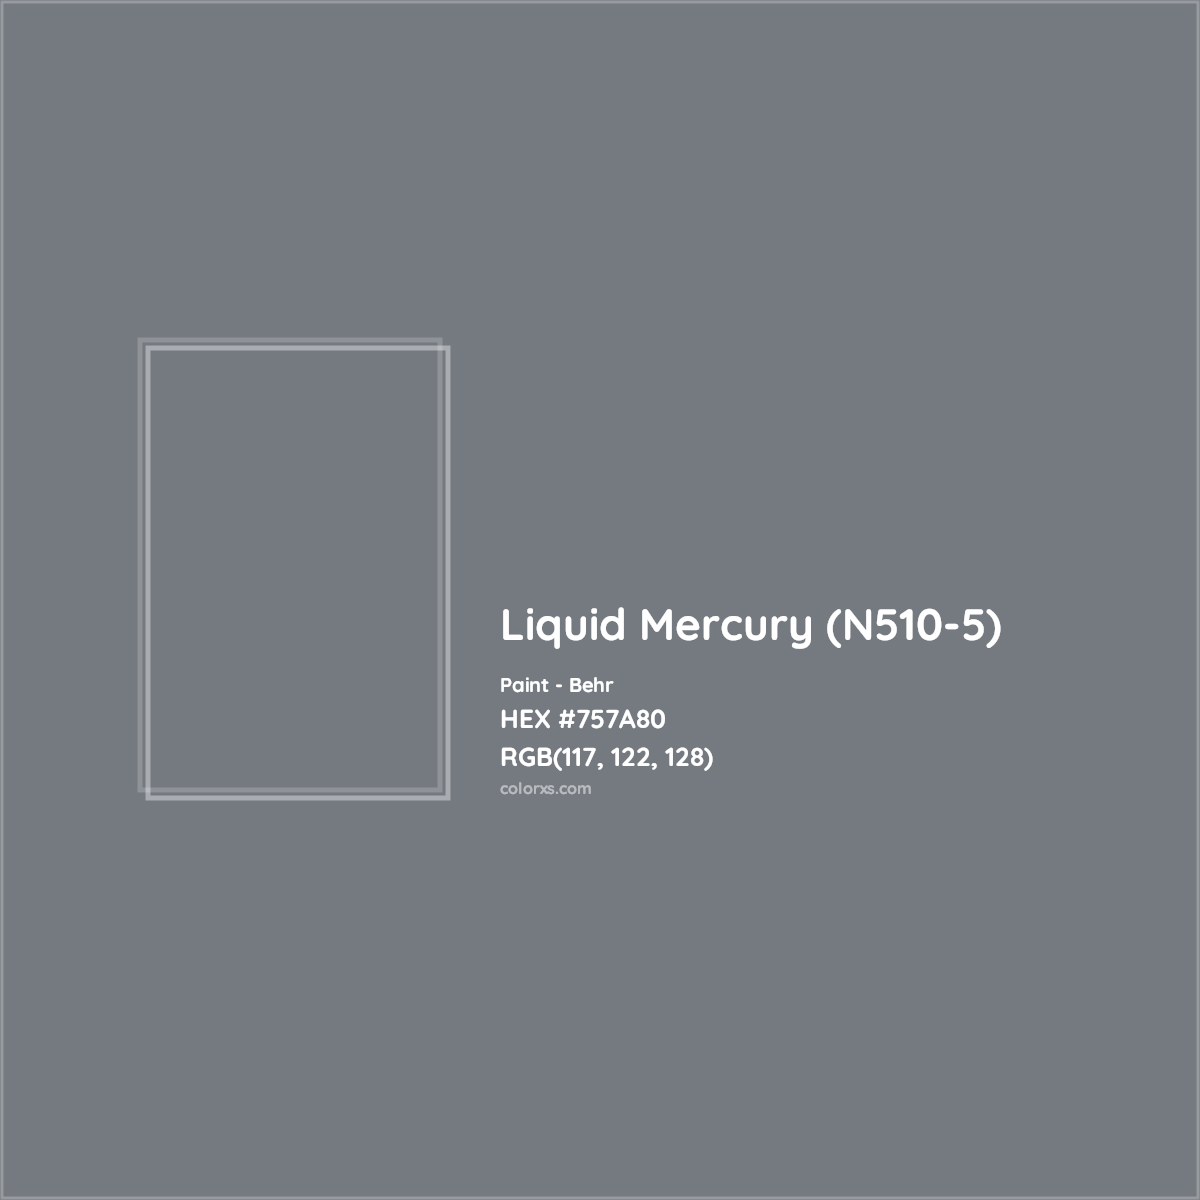 HEX #757A80 Liquid Mercury (N510-5) Paint Behr - Color Code